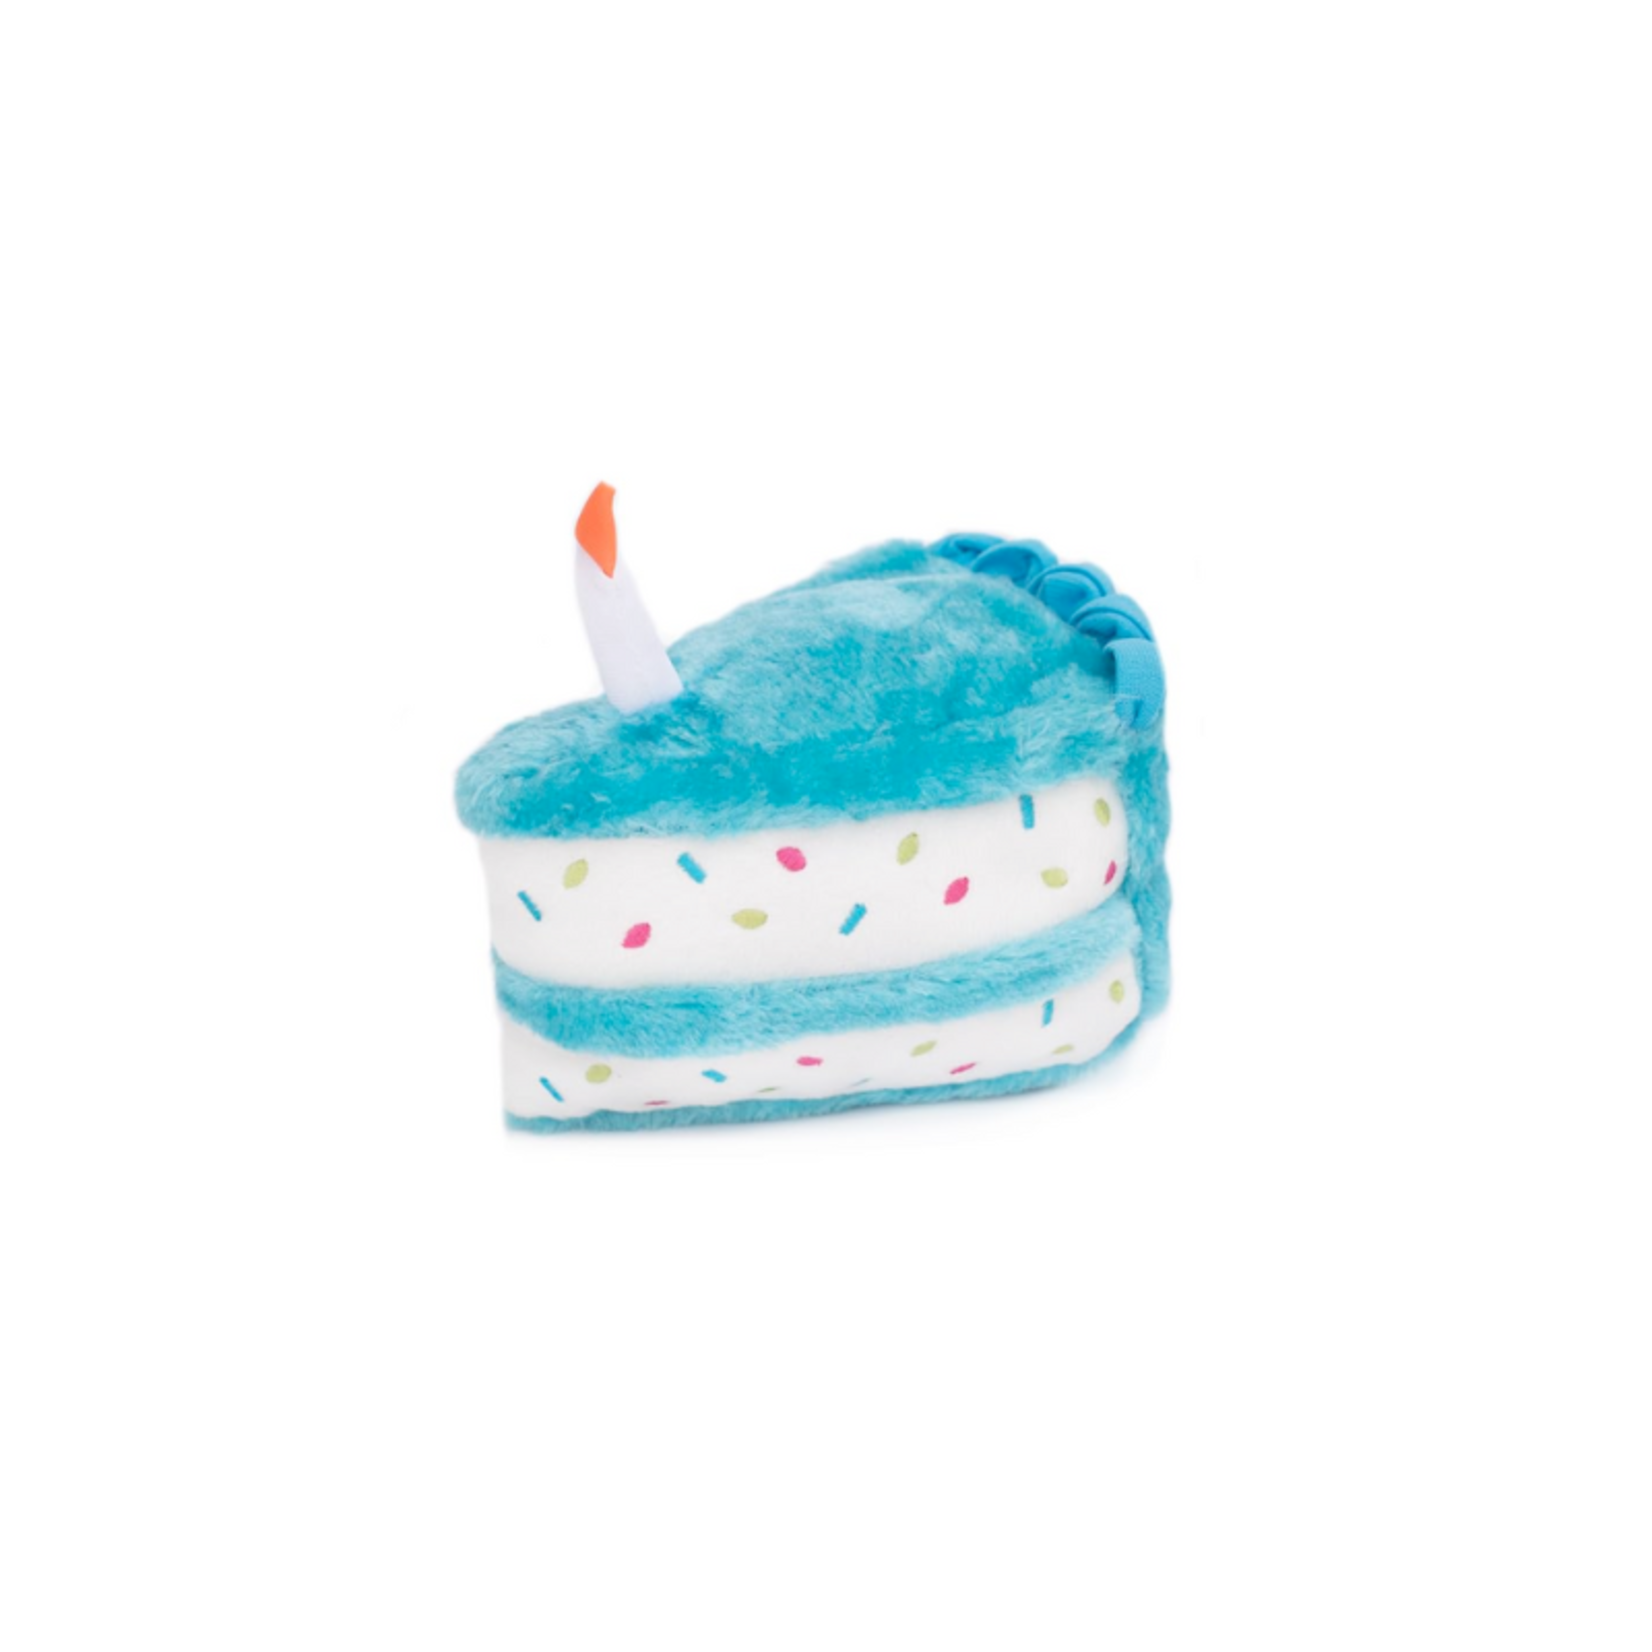 Zippy Paws Blue - Birthday Cake - Dog Toy - Zippy Paws